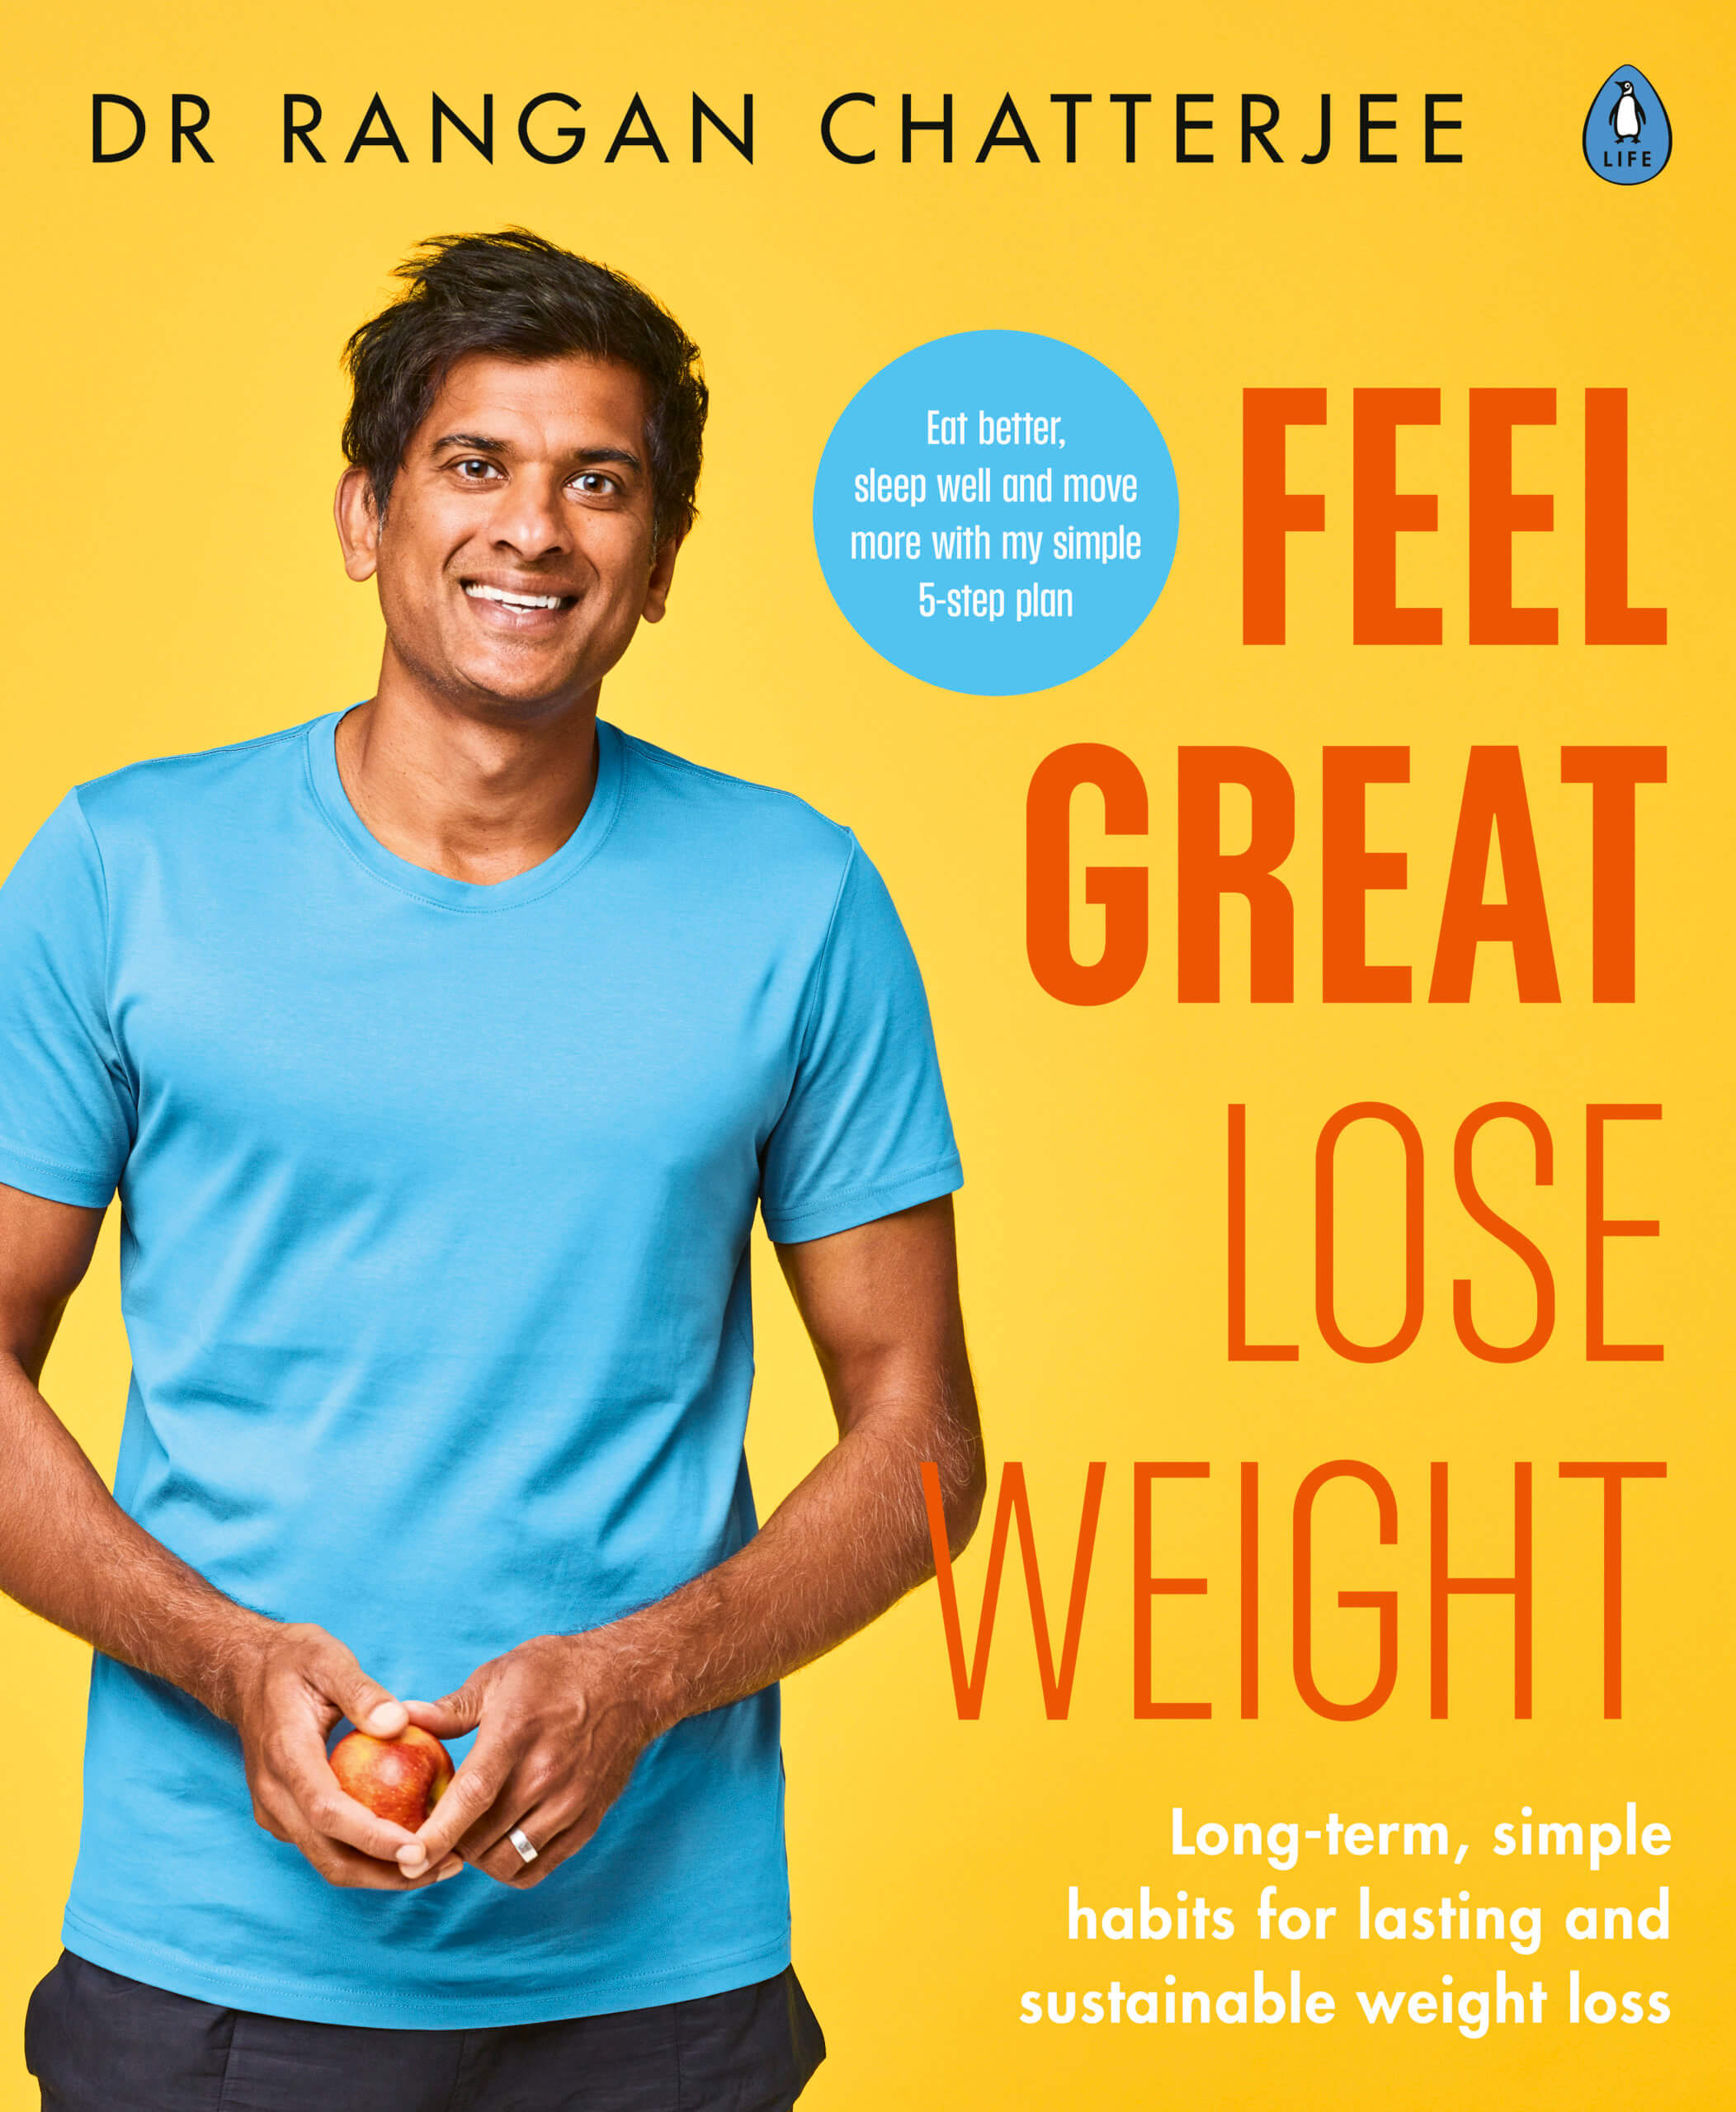 Feel Great Lose Weight - Dr Rangan Chatterjee